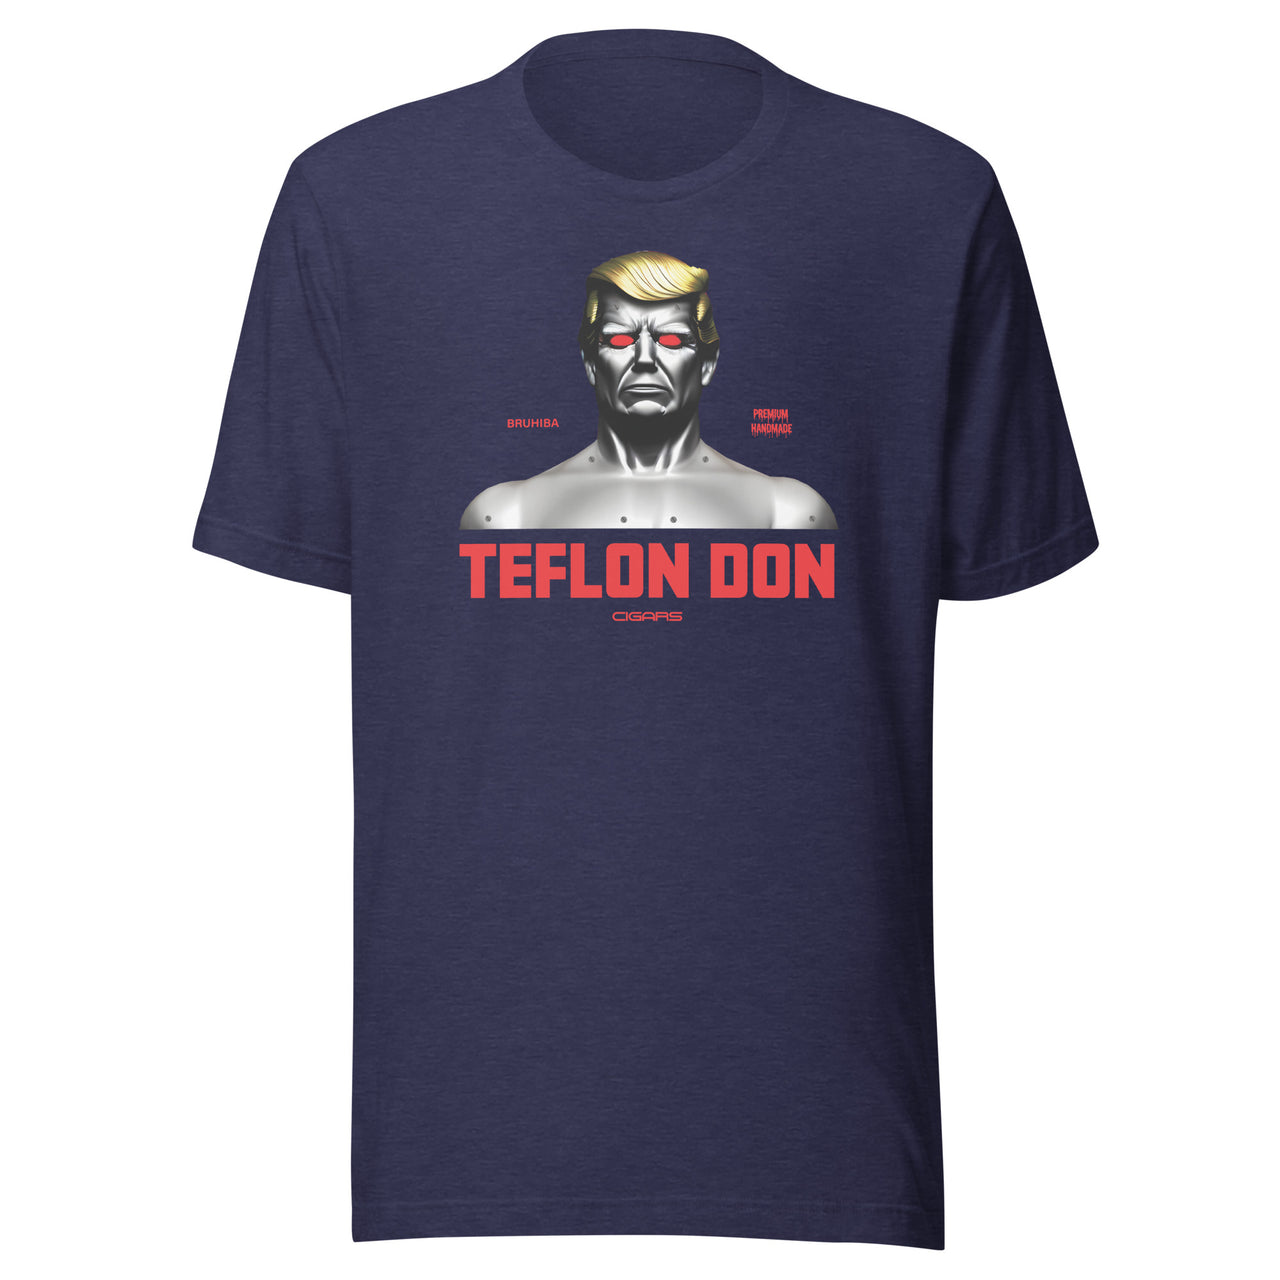 BRUHIBA "Teflon Don" Graphic T-Shirt